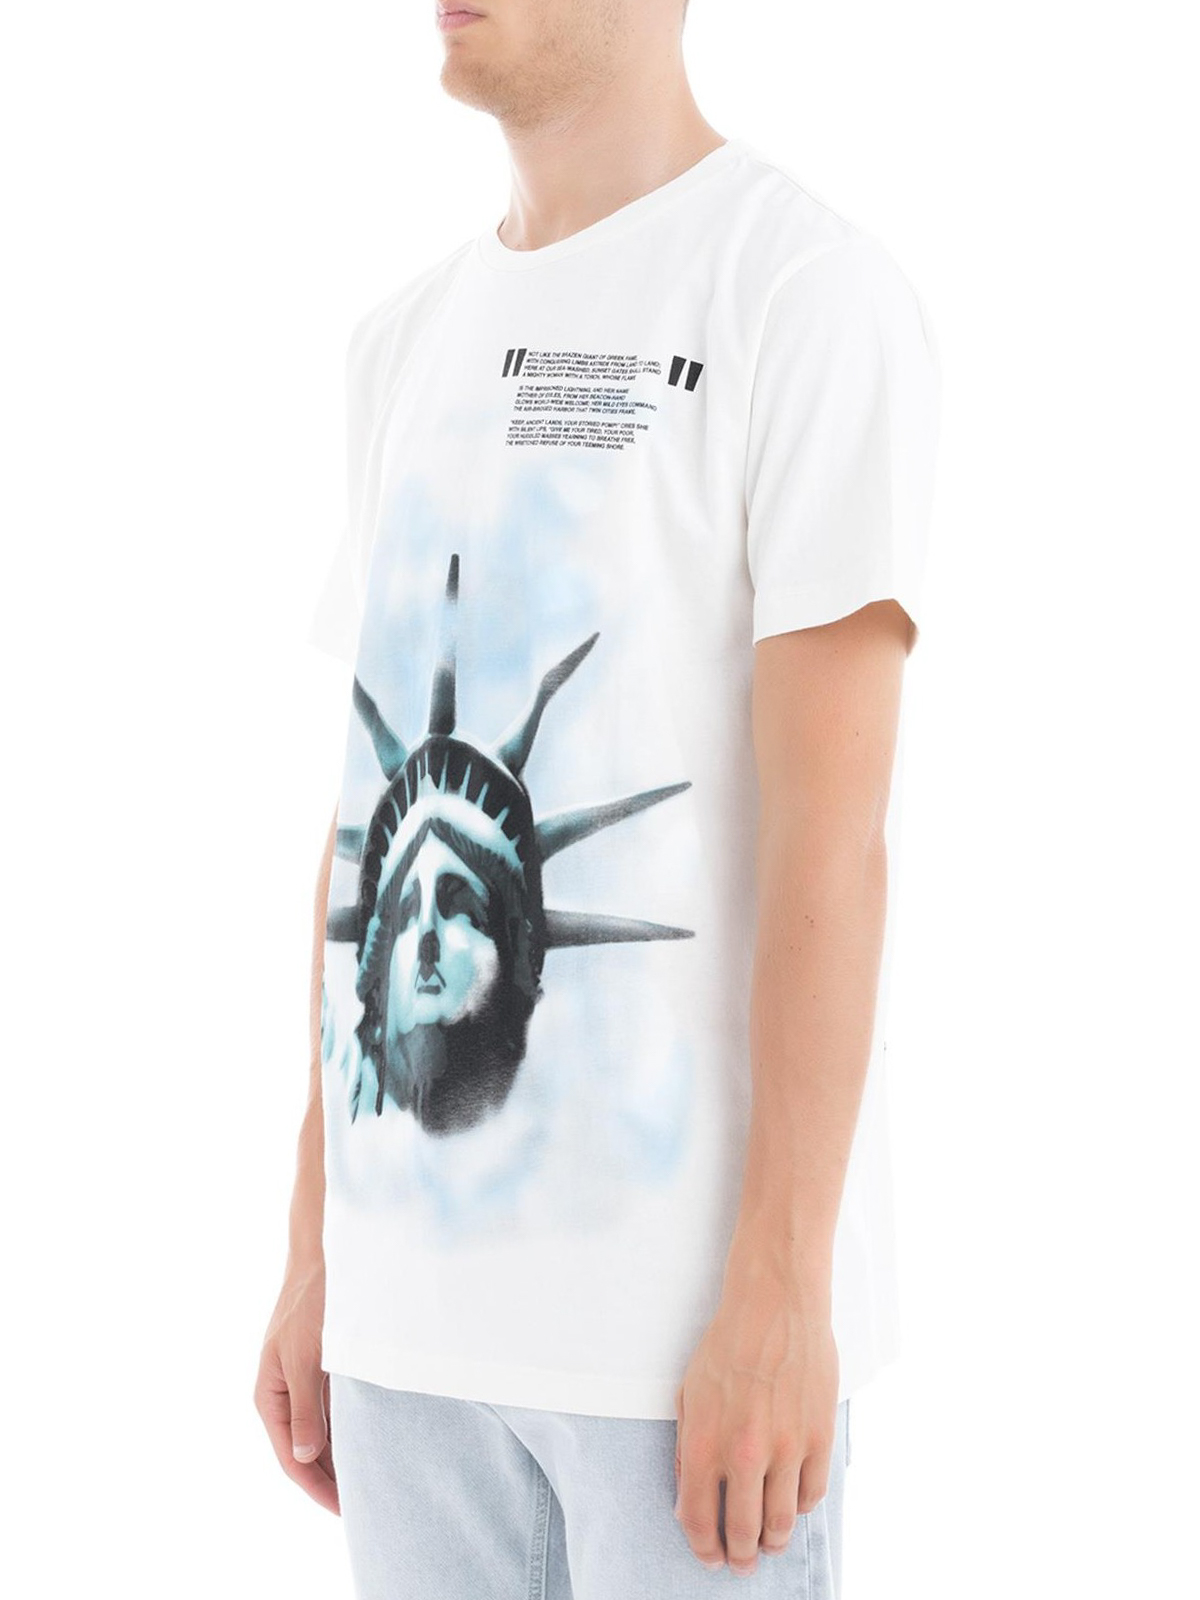 Sprængstoffer tilstrækkelig dynasti T-shirts Off-White - Liberty jersey T-shirt - OMAA027E181850150210